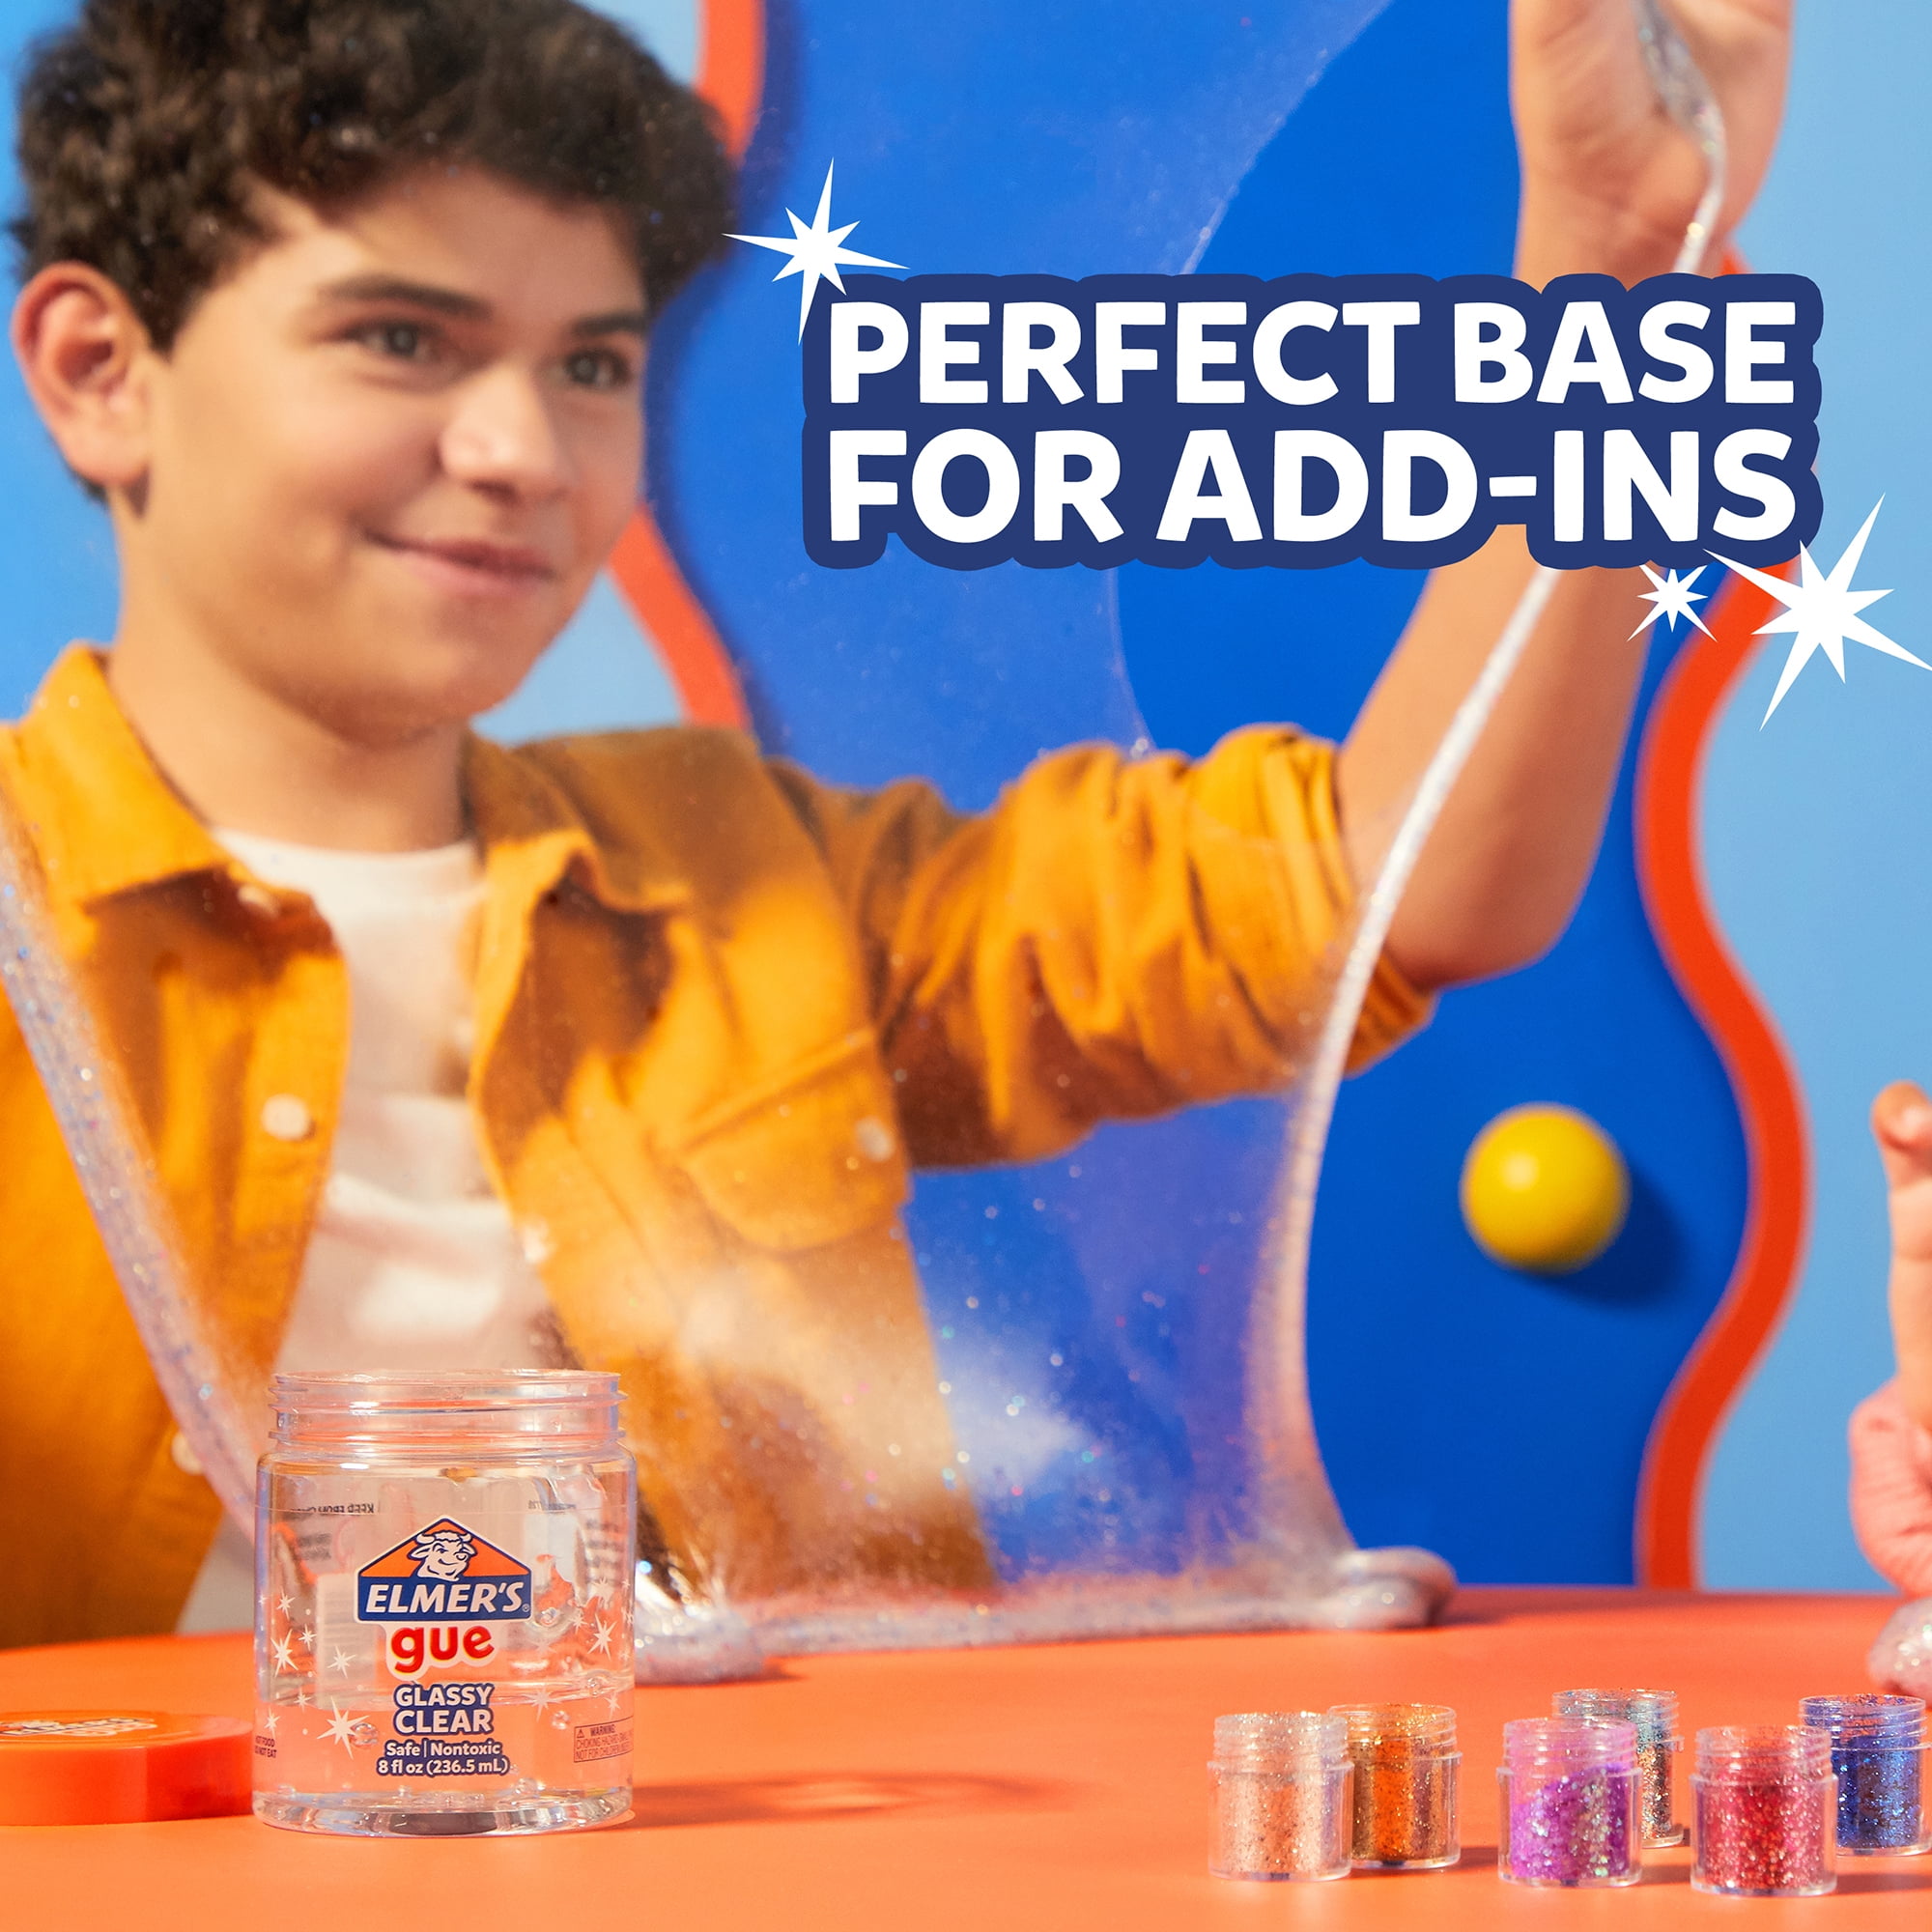 4 LB Huge Glassy Clear Slime Bucket Toy for Kids, FunKidz 64 FL OZ Premade  Big Crystal Slime Pack Gift with 29 Sets Add-ins Jumbo Slime Kit for Girls